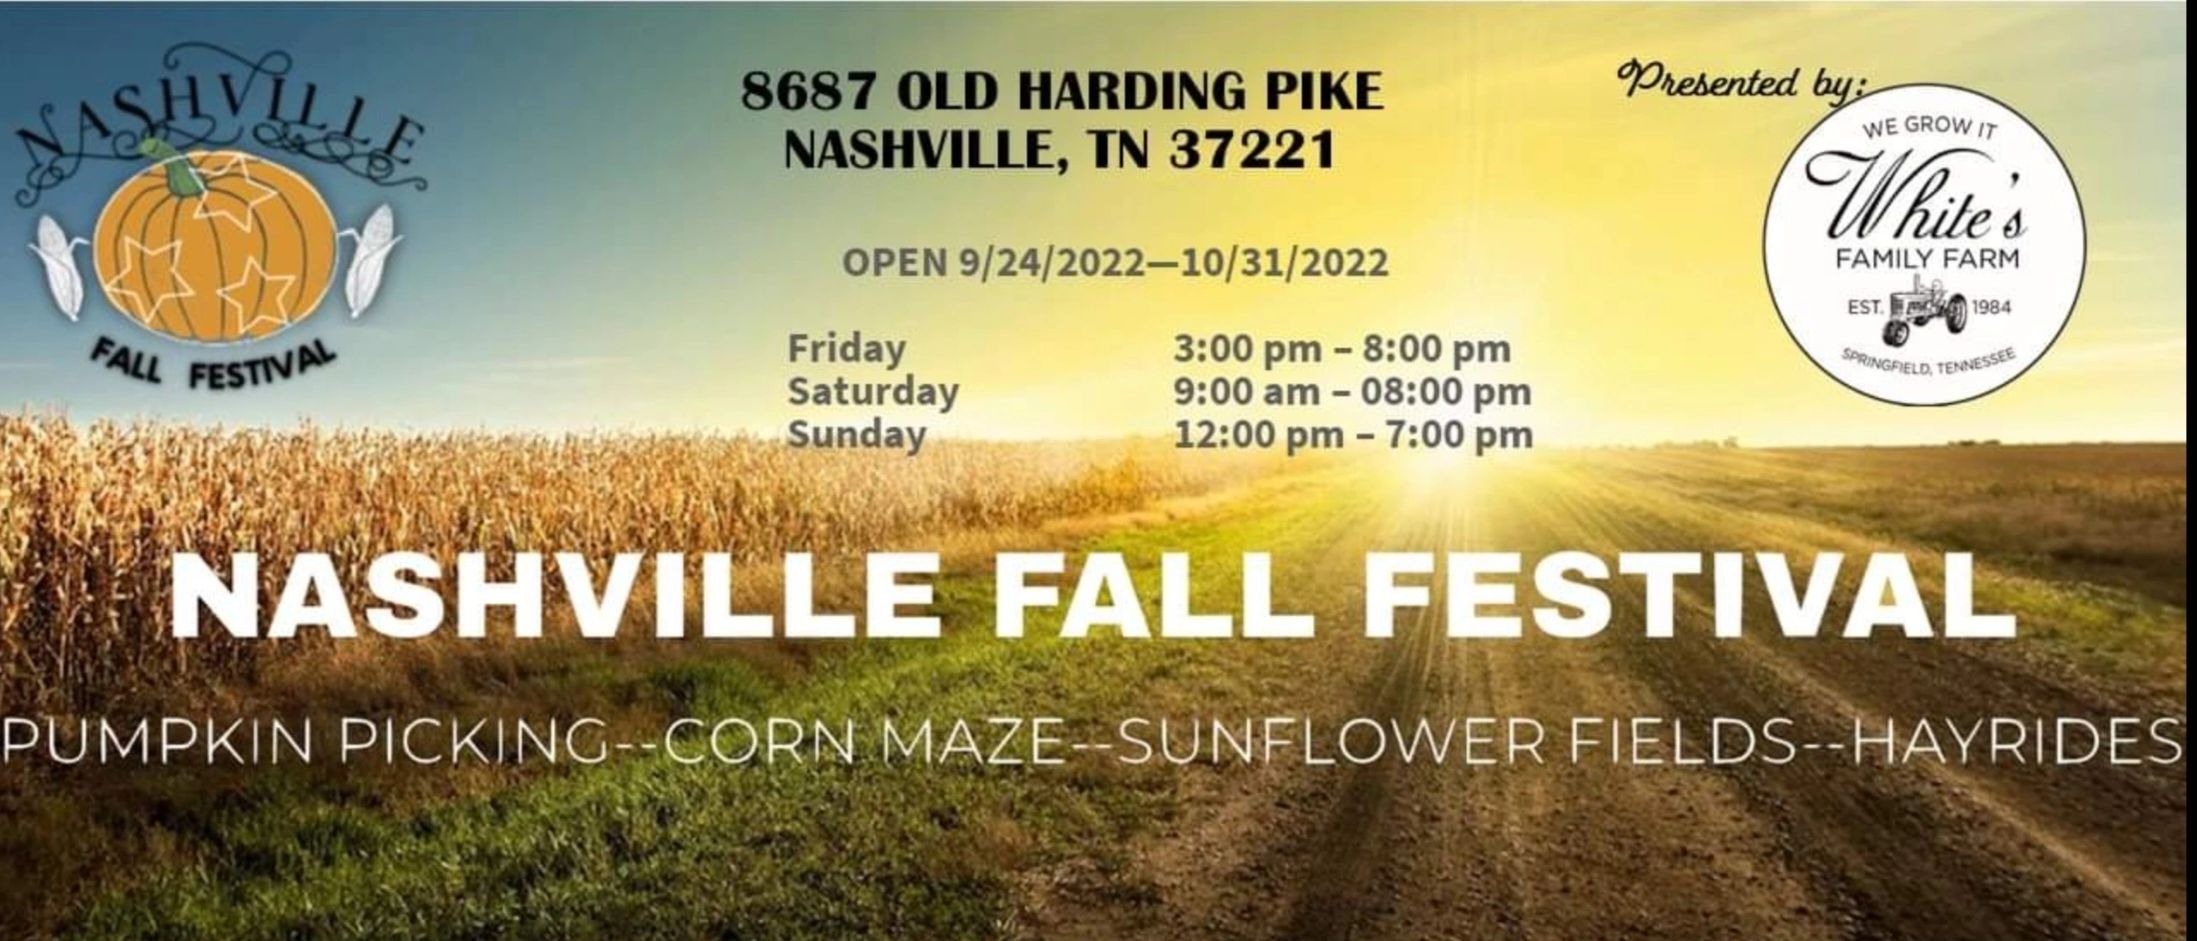 Nashville Fall Festival Cornmaze, Festival, Pumpkin Picking